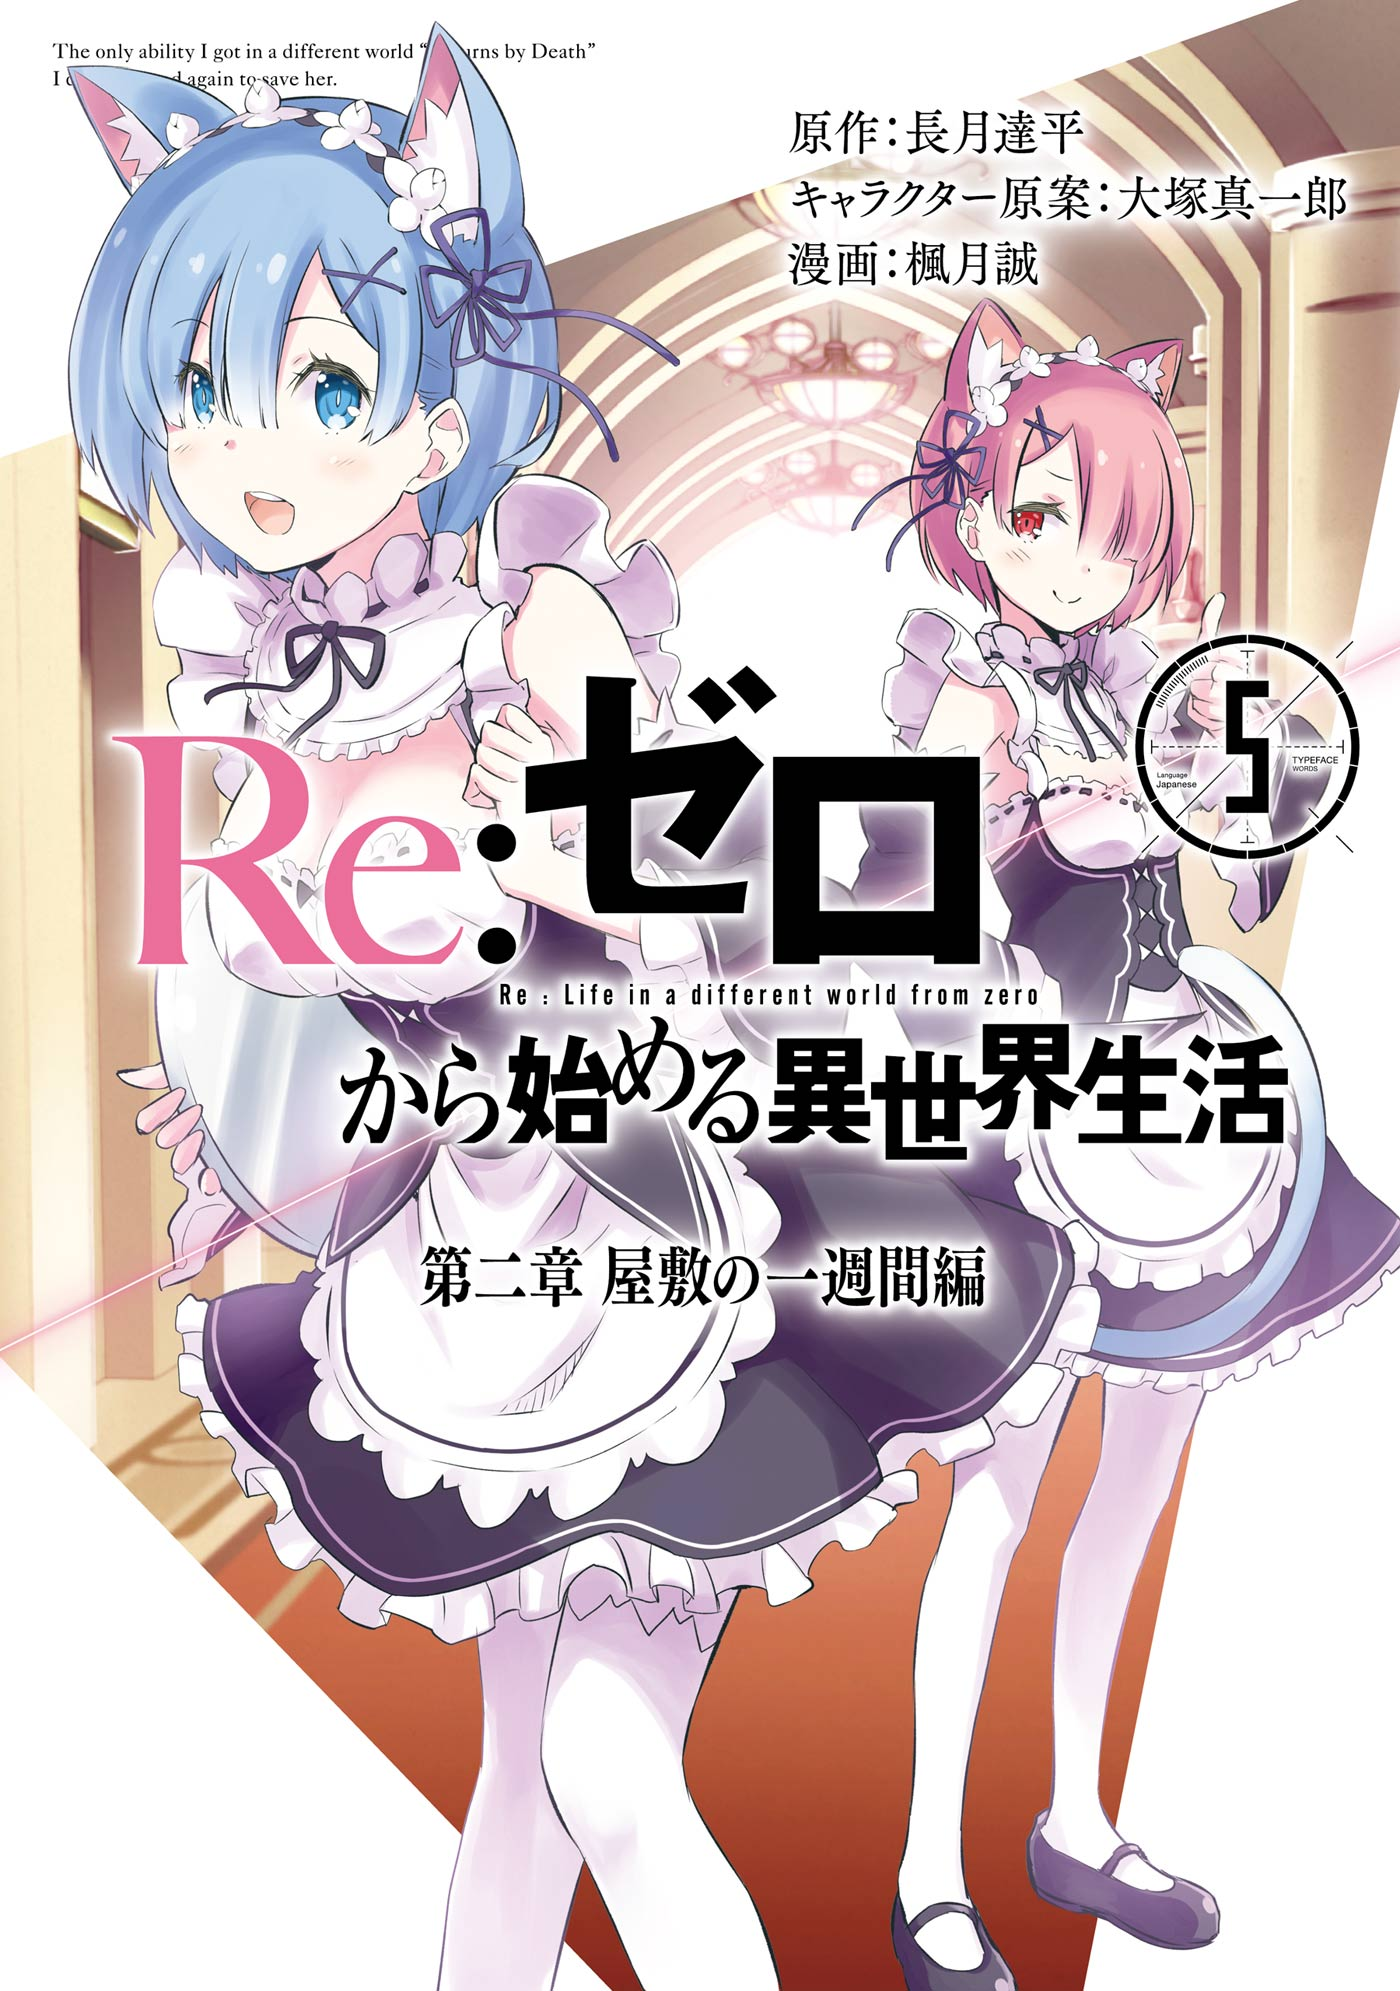 Category:Re:Zero Manga, Re:Zero Wiki